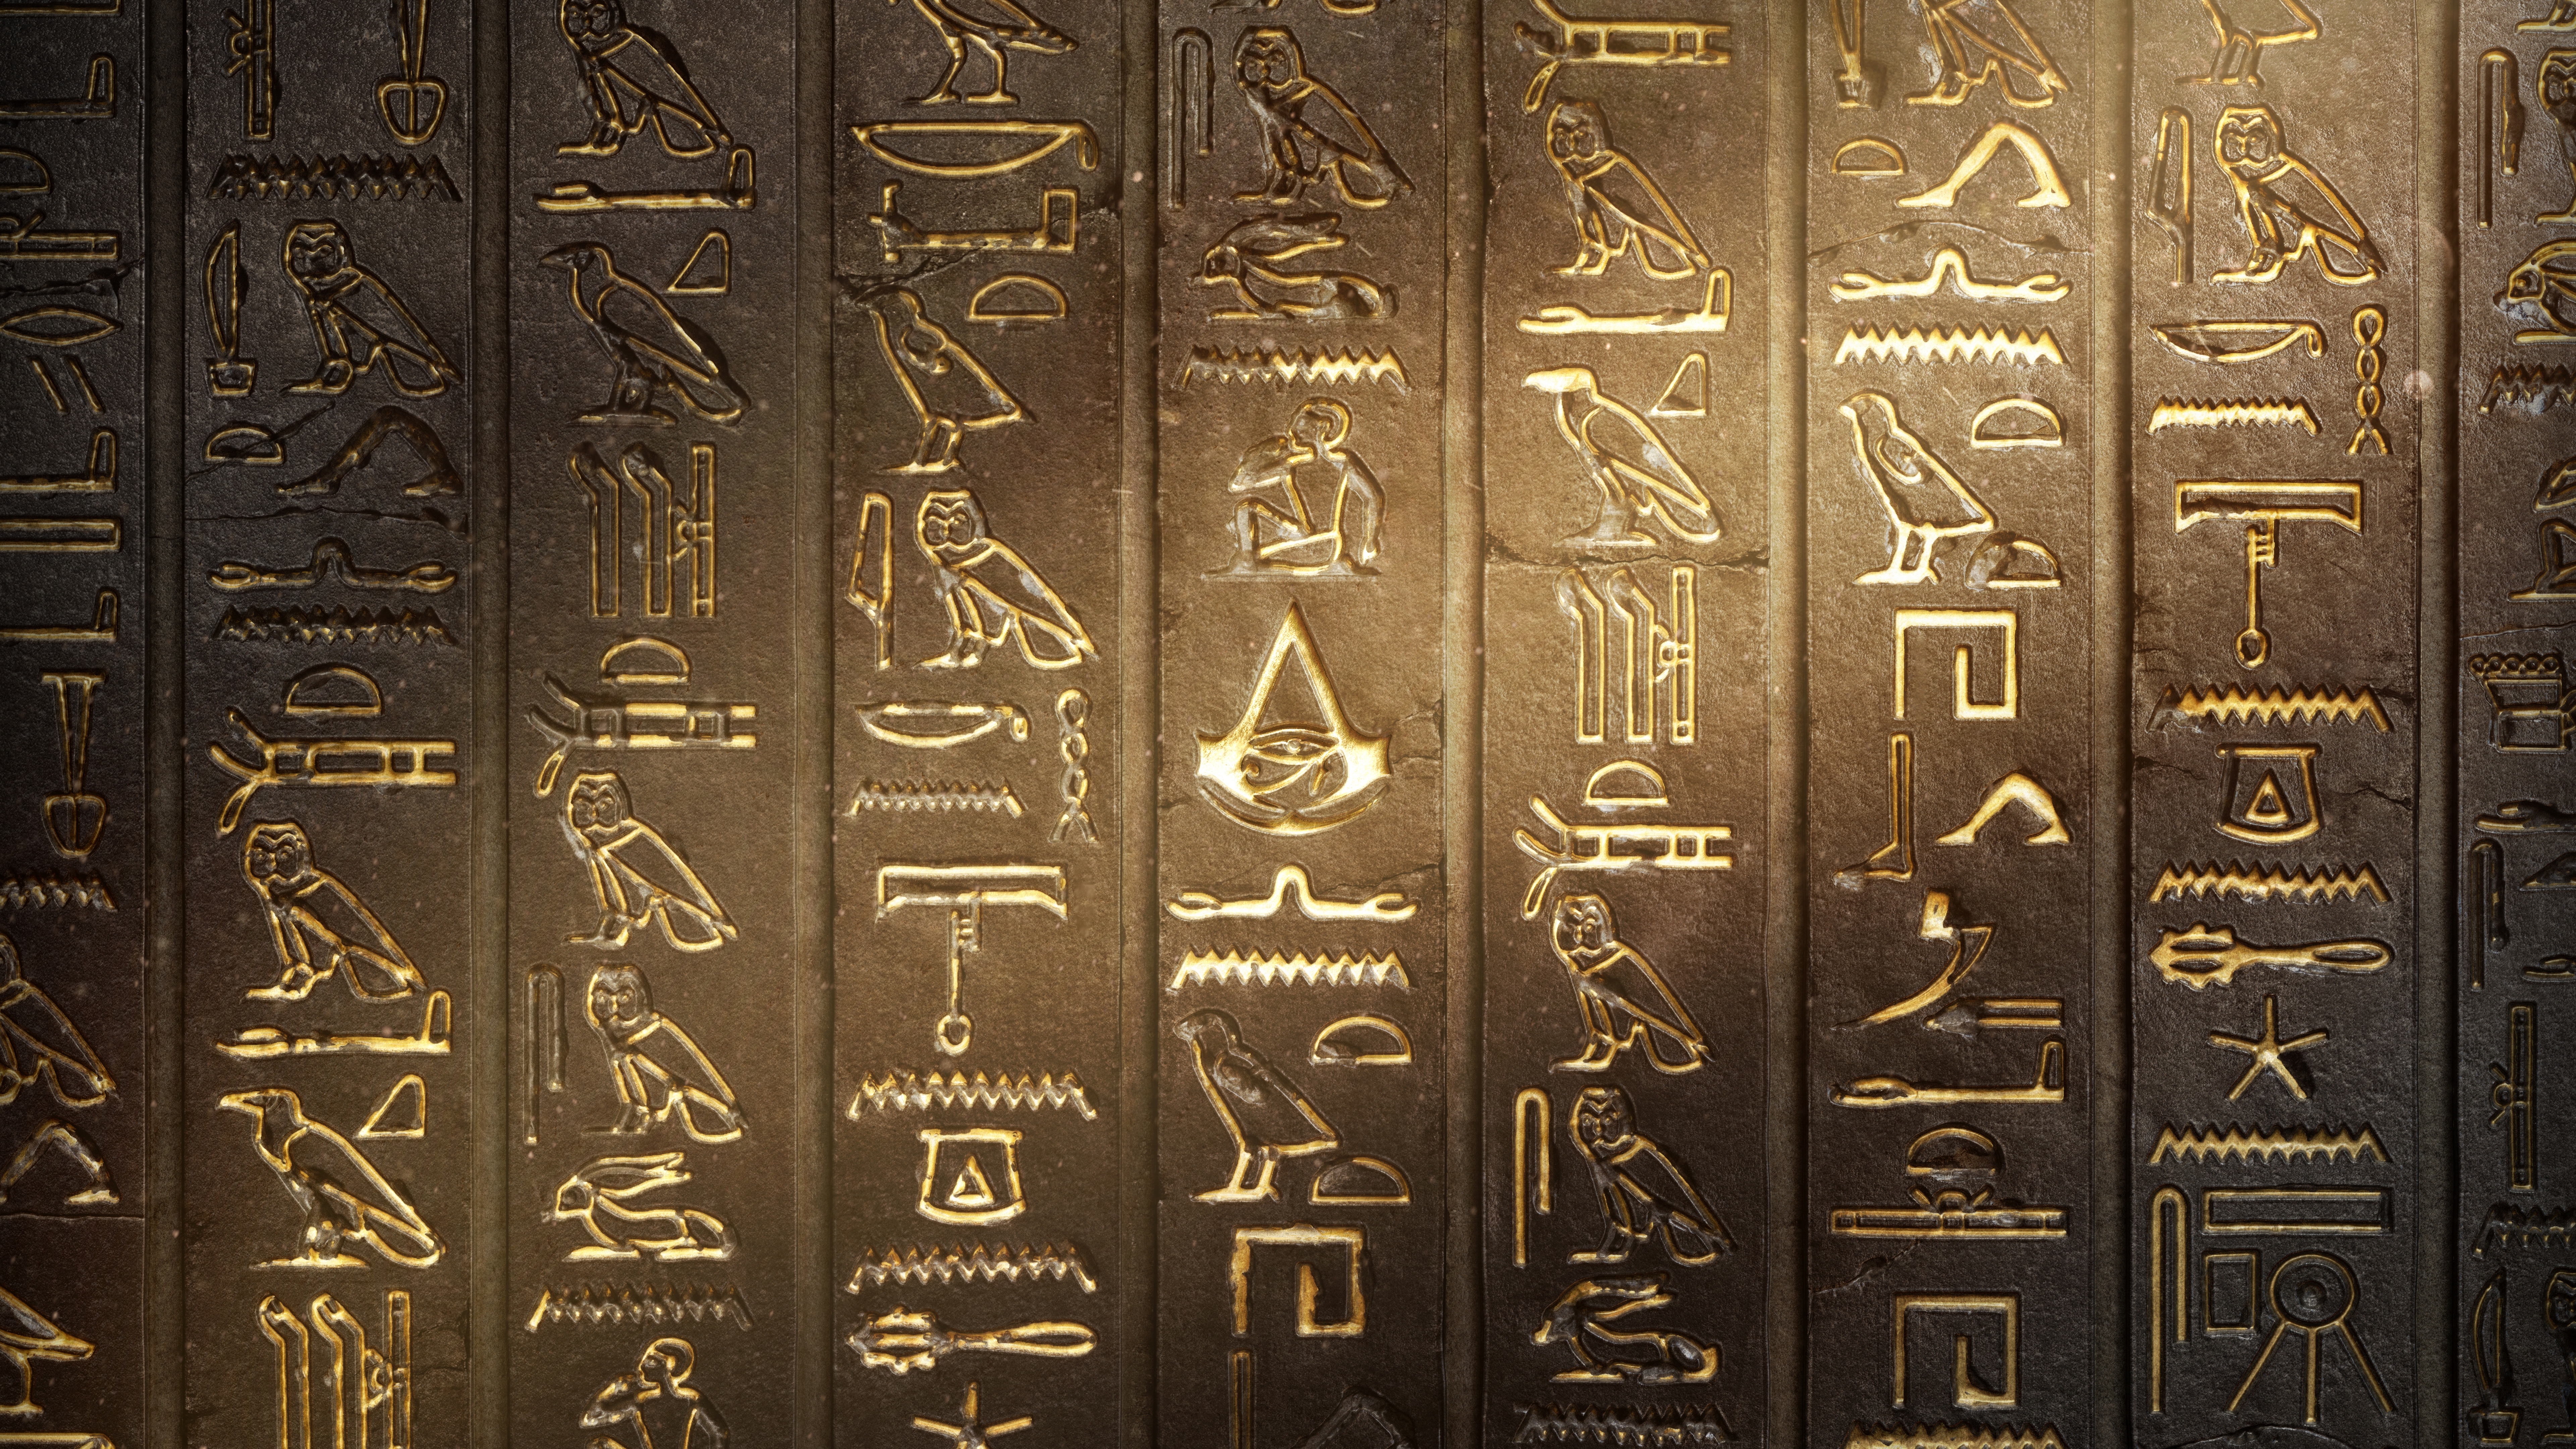 video games, Assassins Creed, Wall, Hieroglyphs, Engraving, Symbols, Assassins Creed: Origins Wallpaper